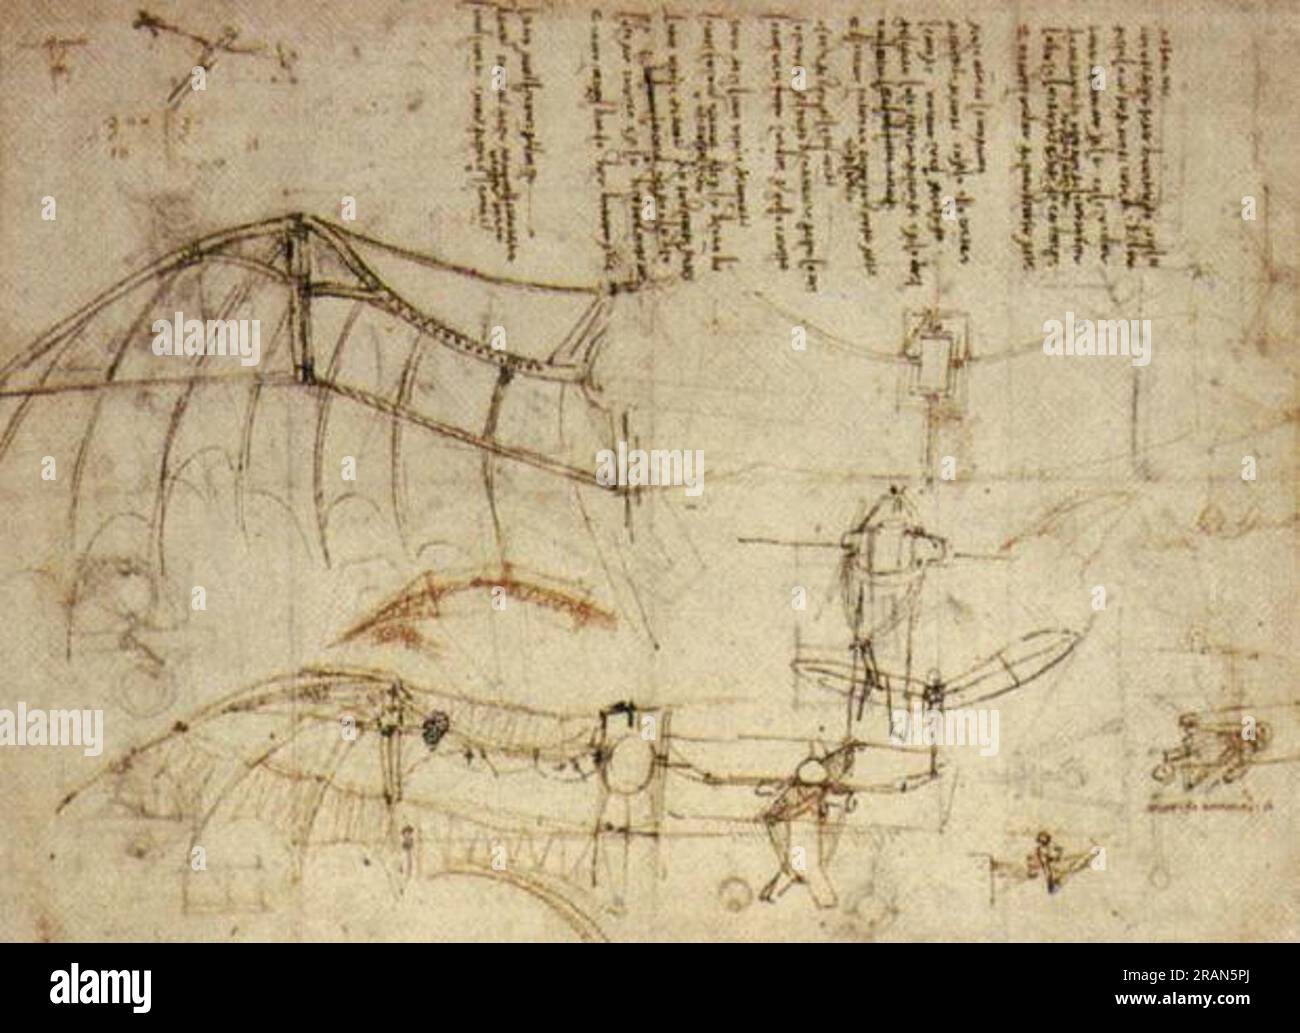 Design for a Flying Machine 1488; Mailand, Italien, von Leonardo da Vinci Stockfoto